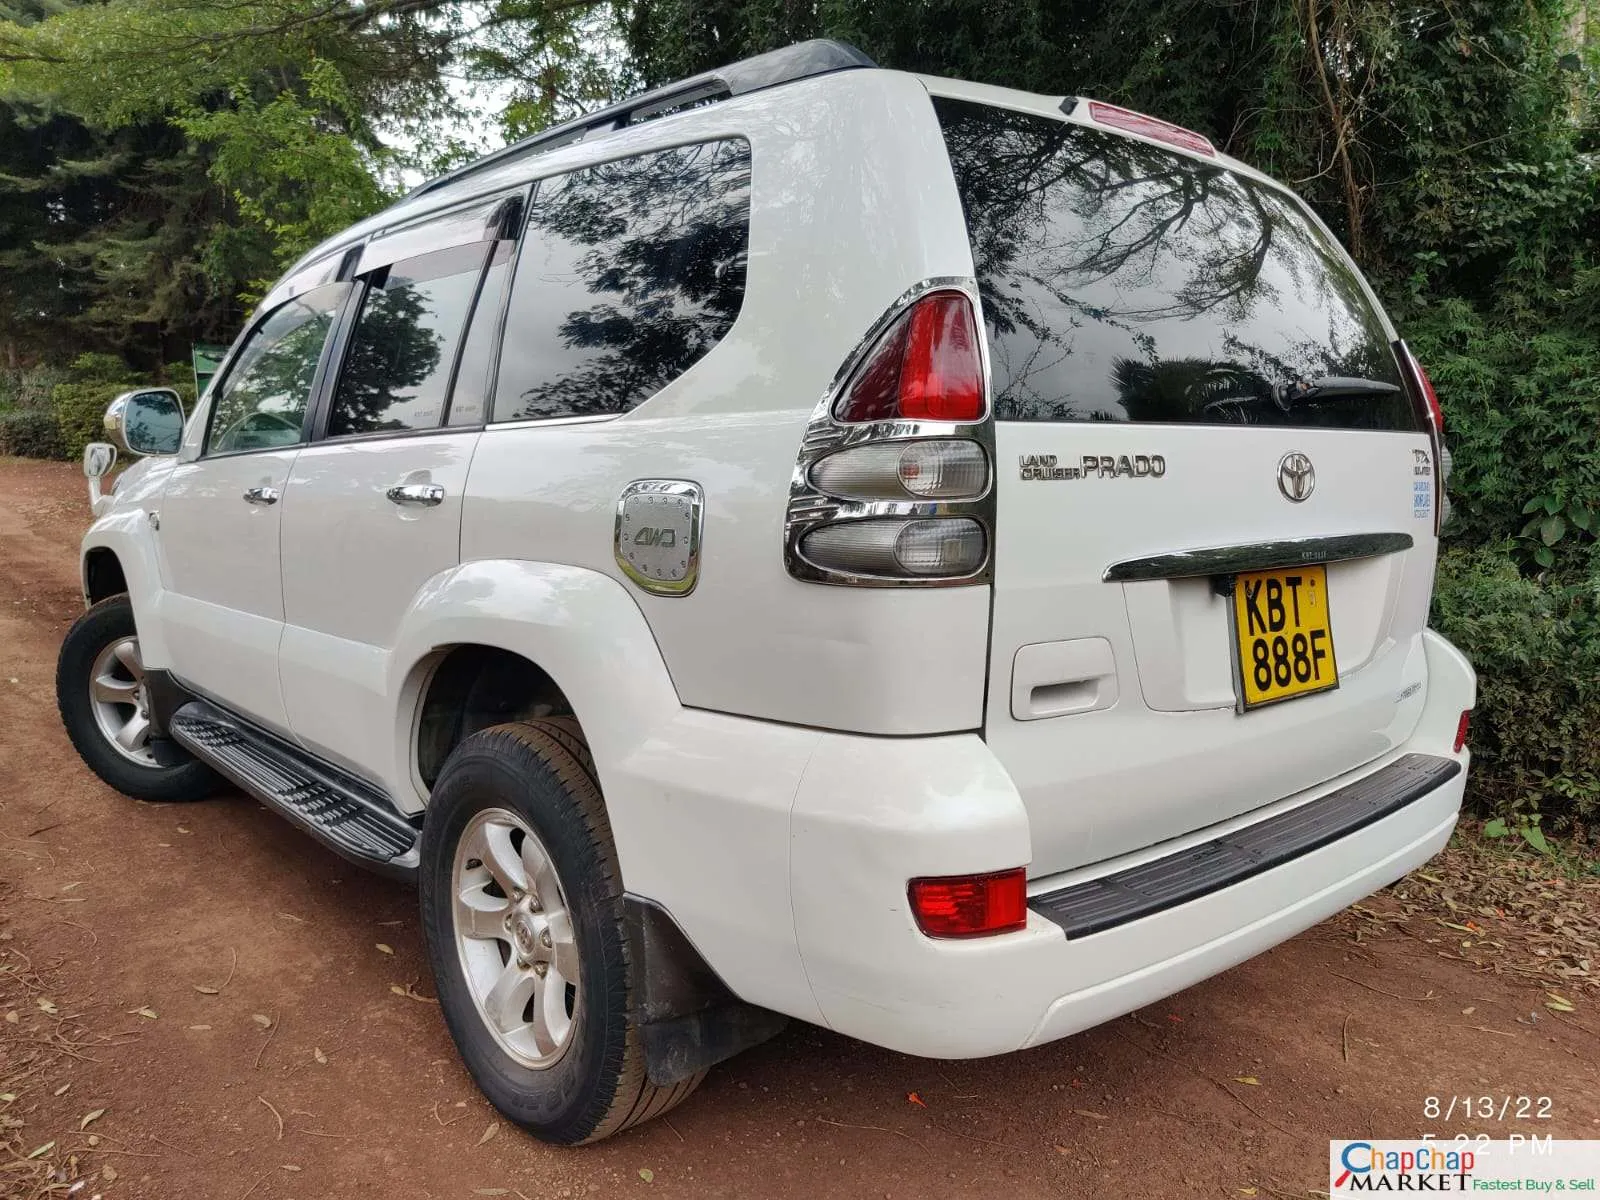 Toyota Prado J120 Kenya 🔥 You Pay 40% Deposit Trade in OK EXCLUSIVE Toyota Prado j120 for sale in kenya hire purchase installments